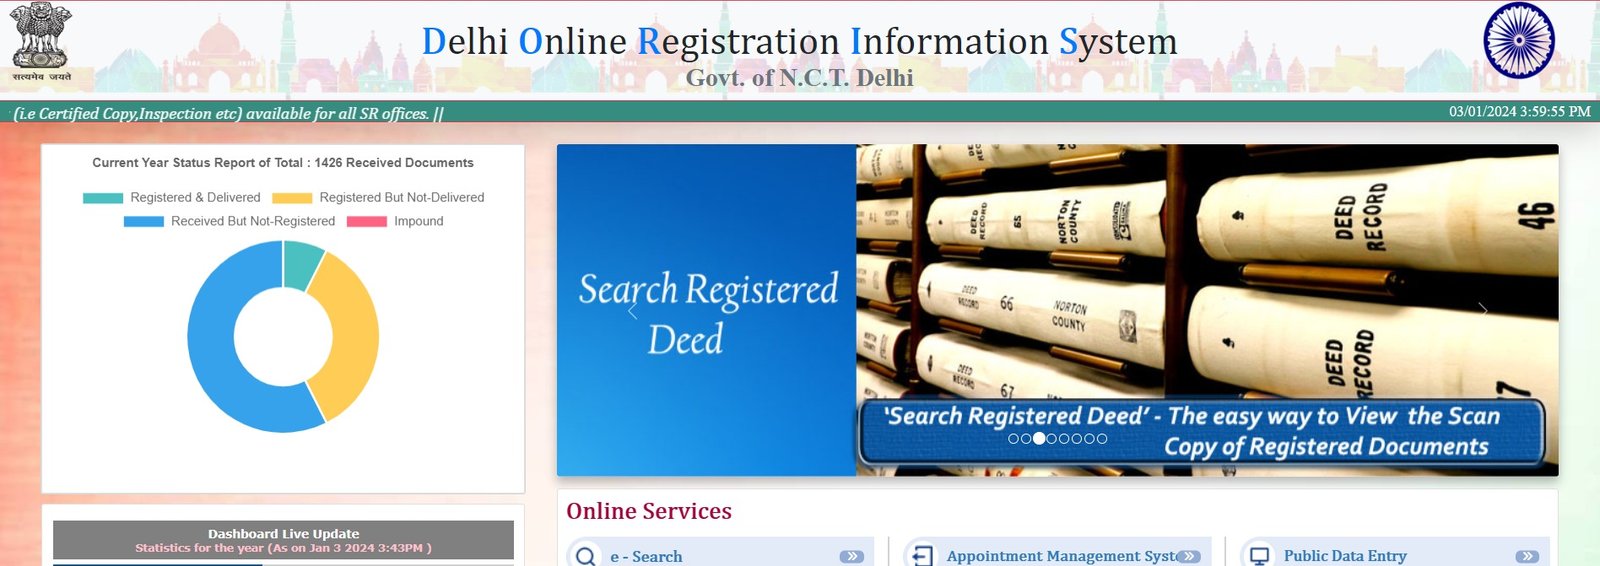 IGRS Delhi Property Registration